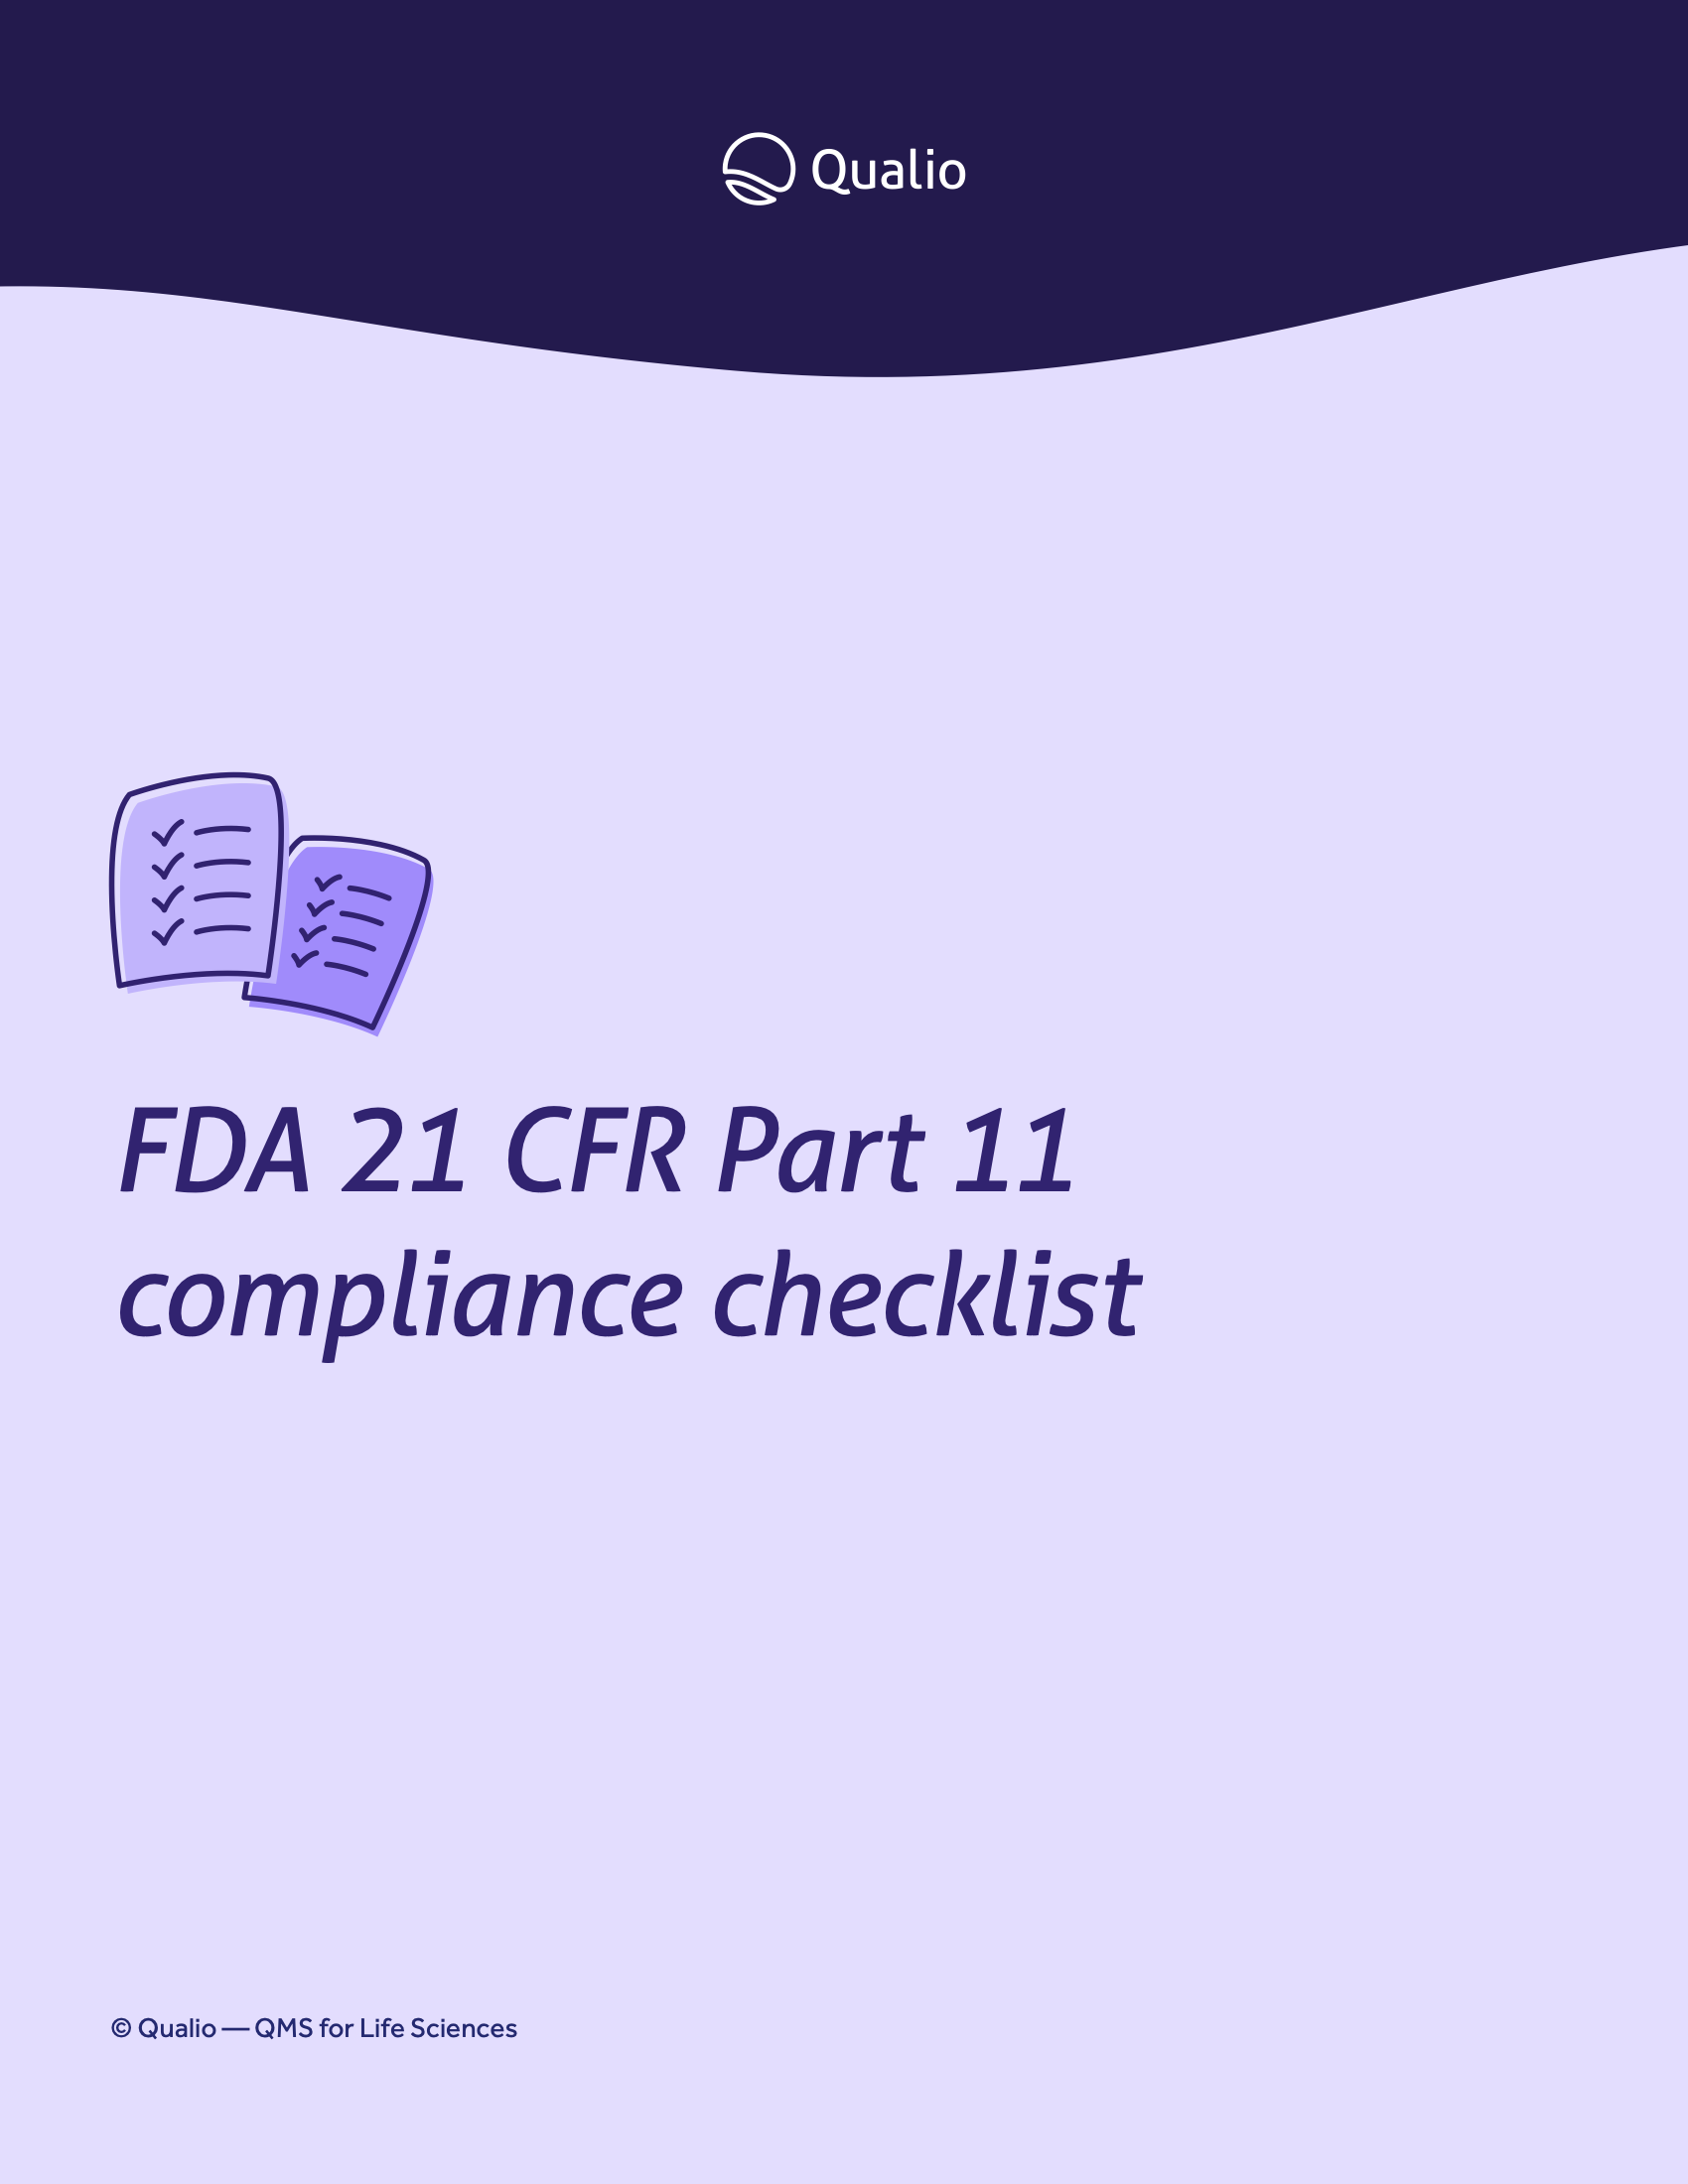 CFR checklist